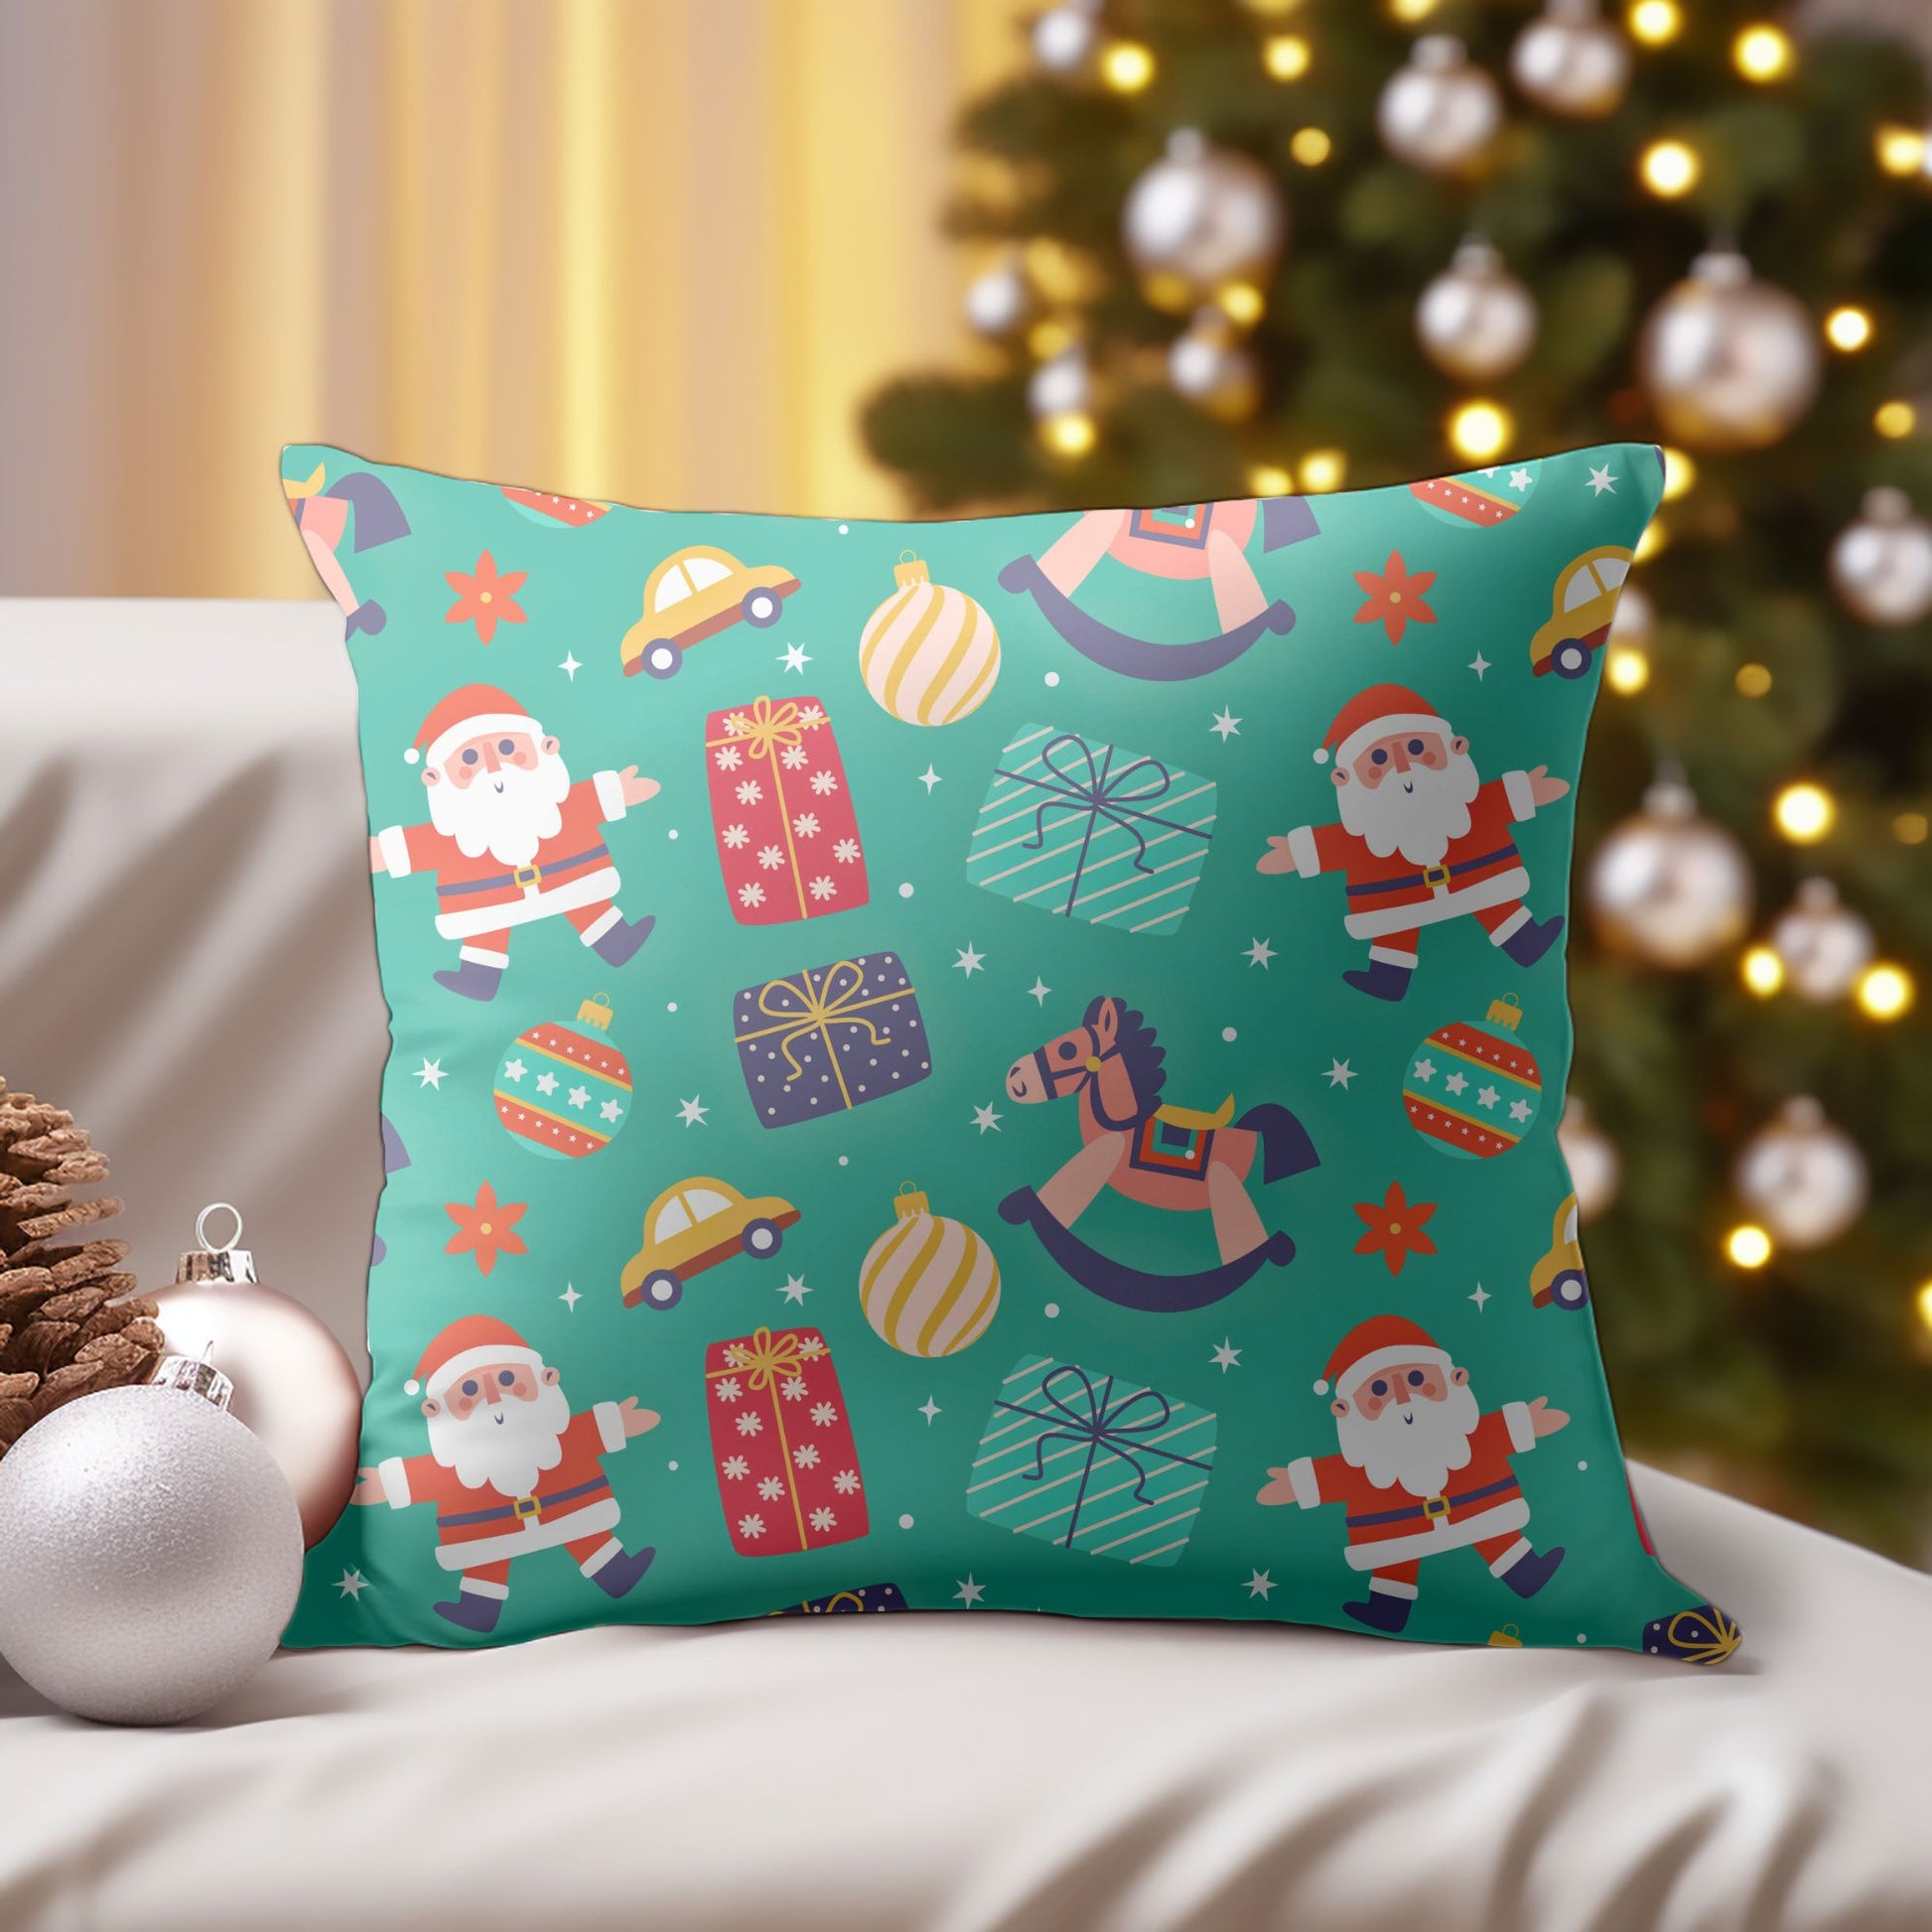 Adorable Christmas Decorative Pillow for Kids